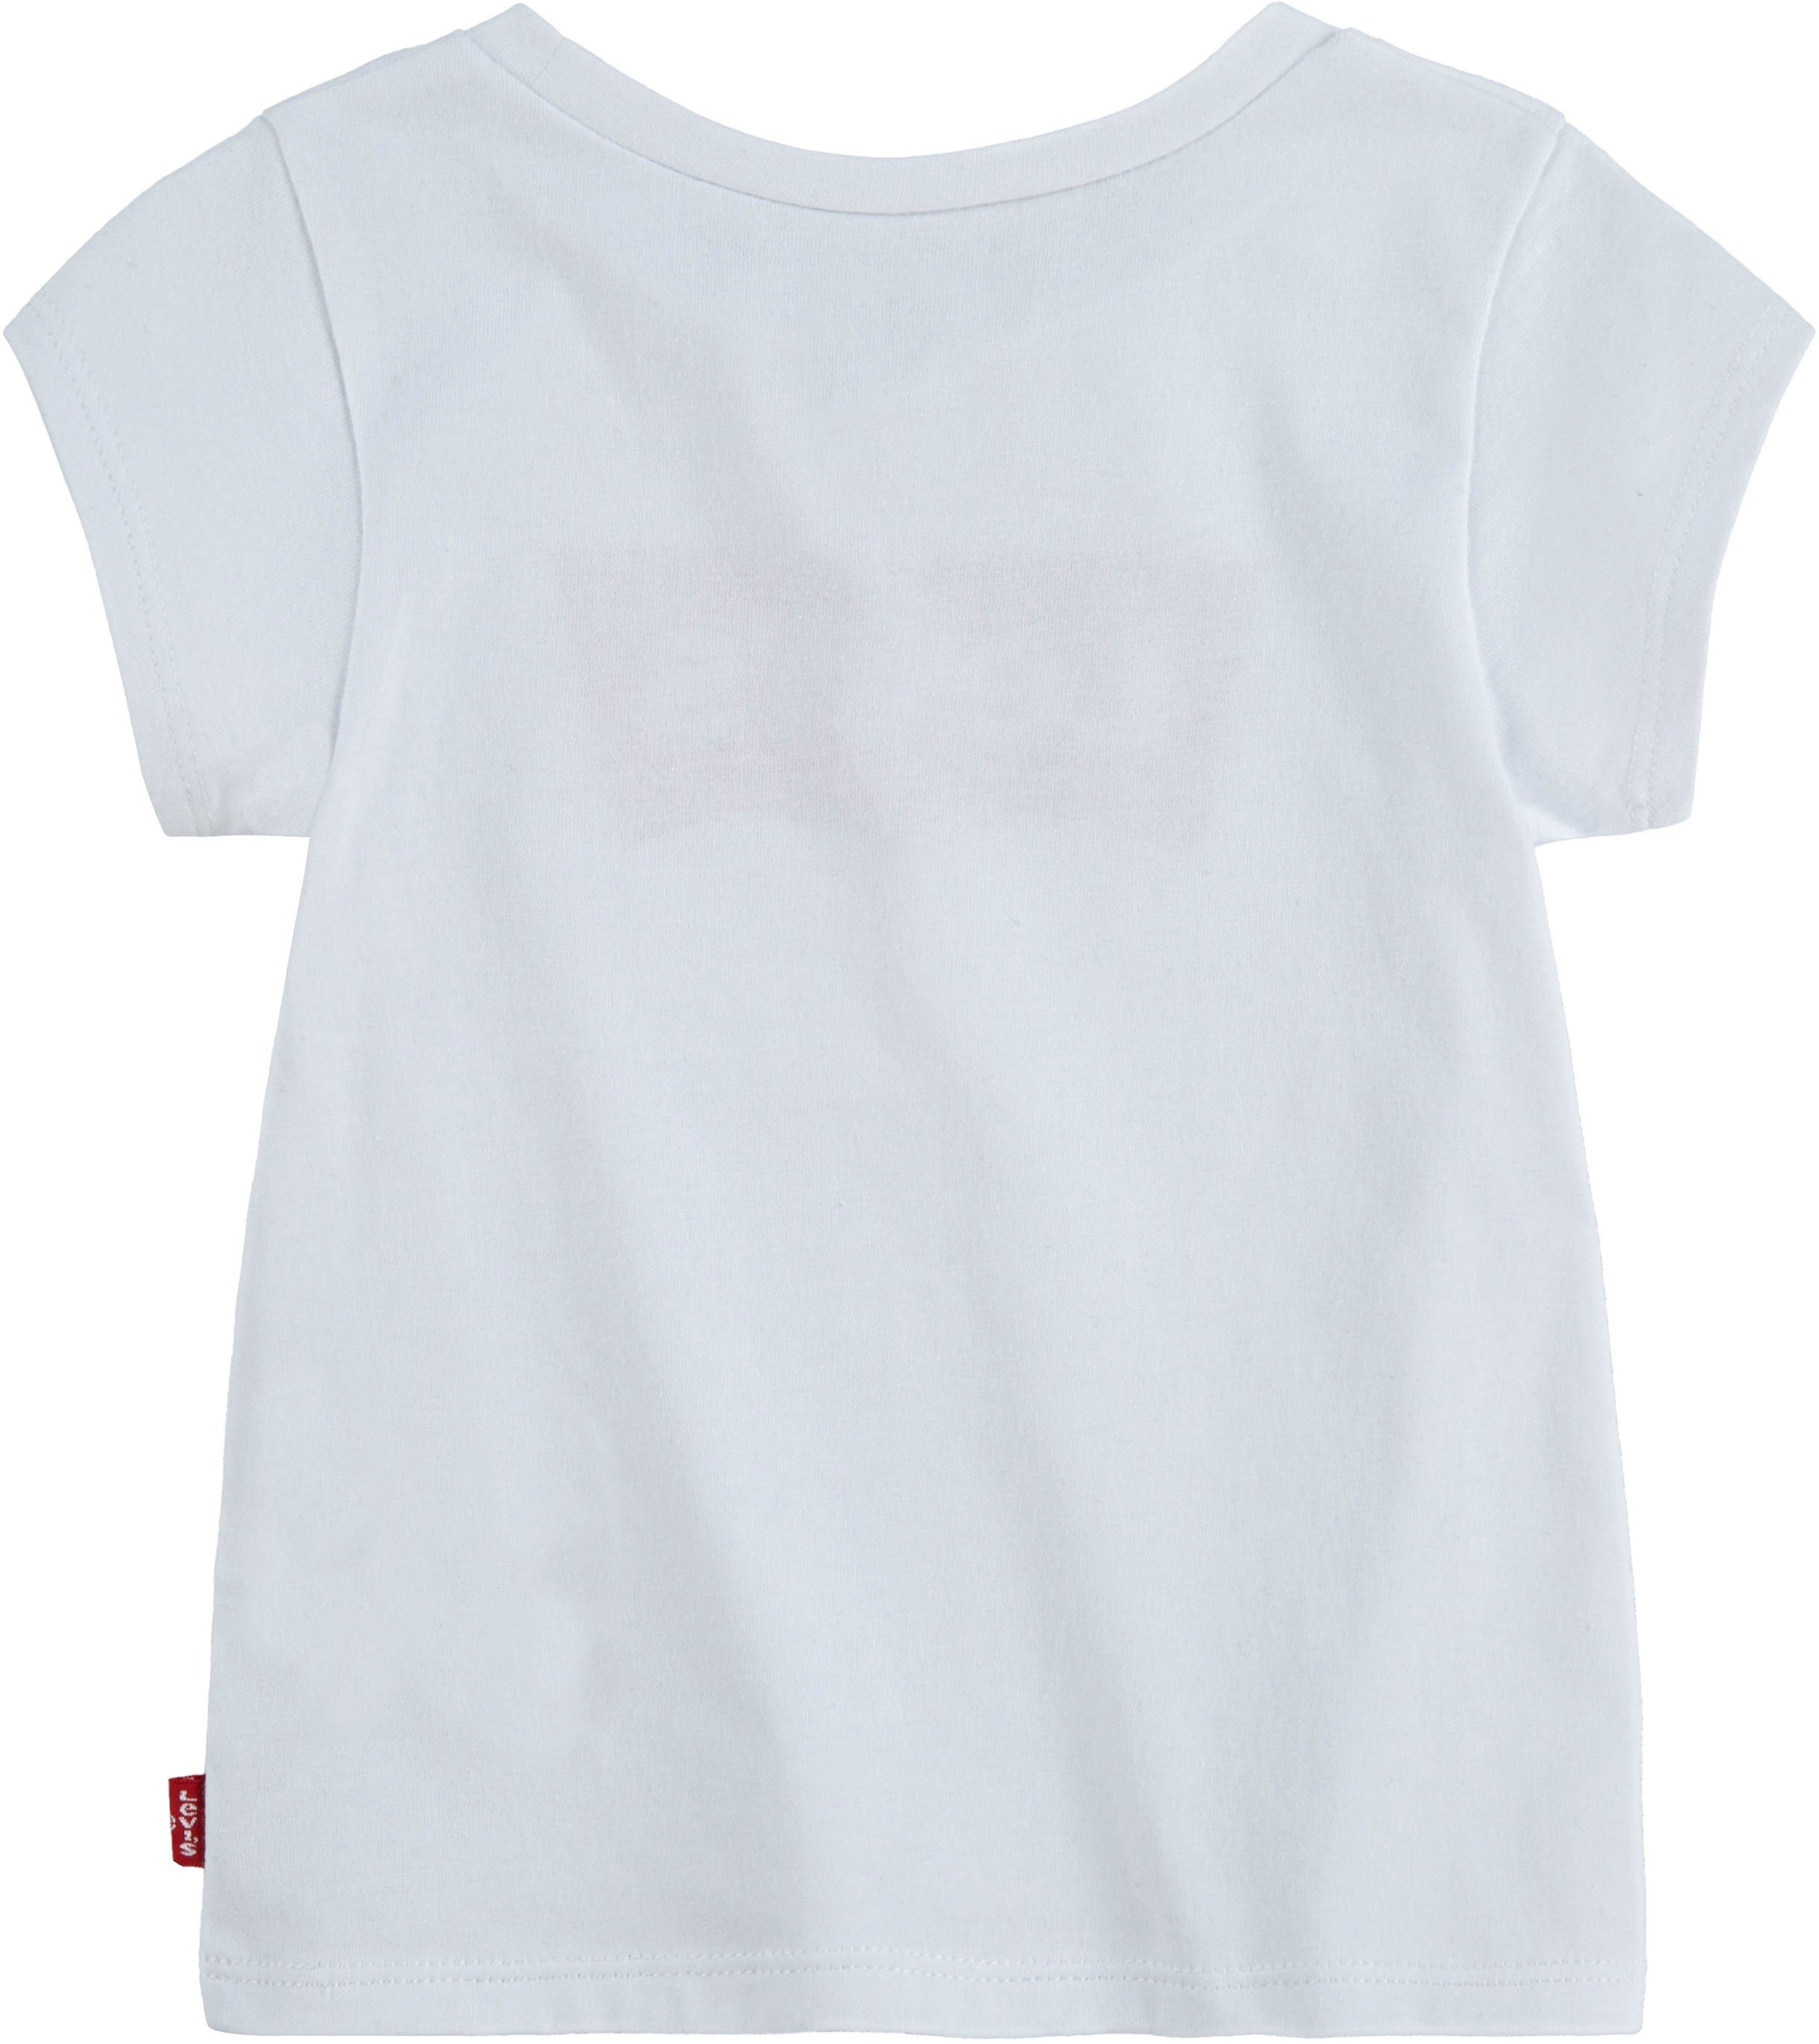 Levi's® Kids T-Shirt BABY rot-weiß GIRLS for